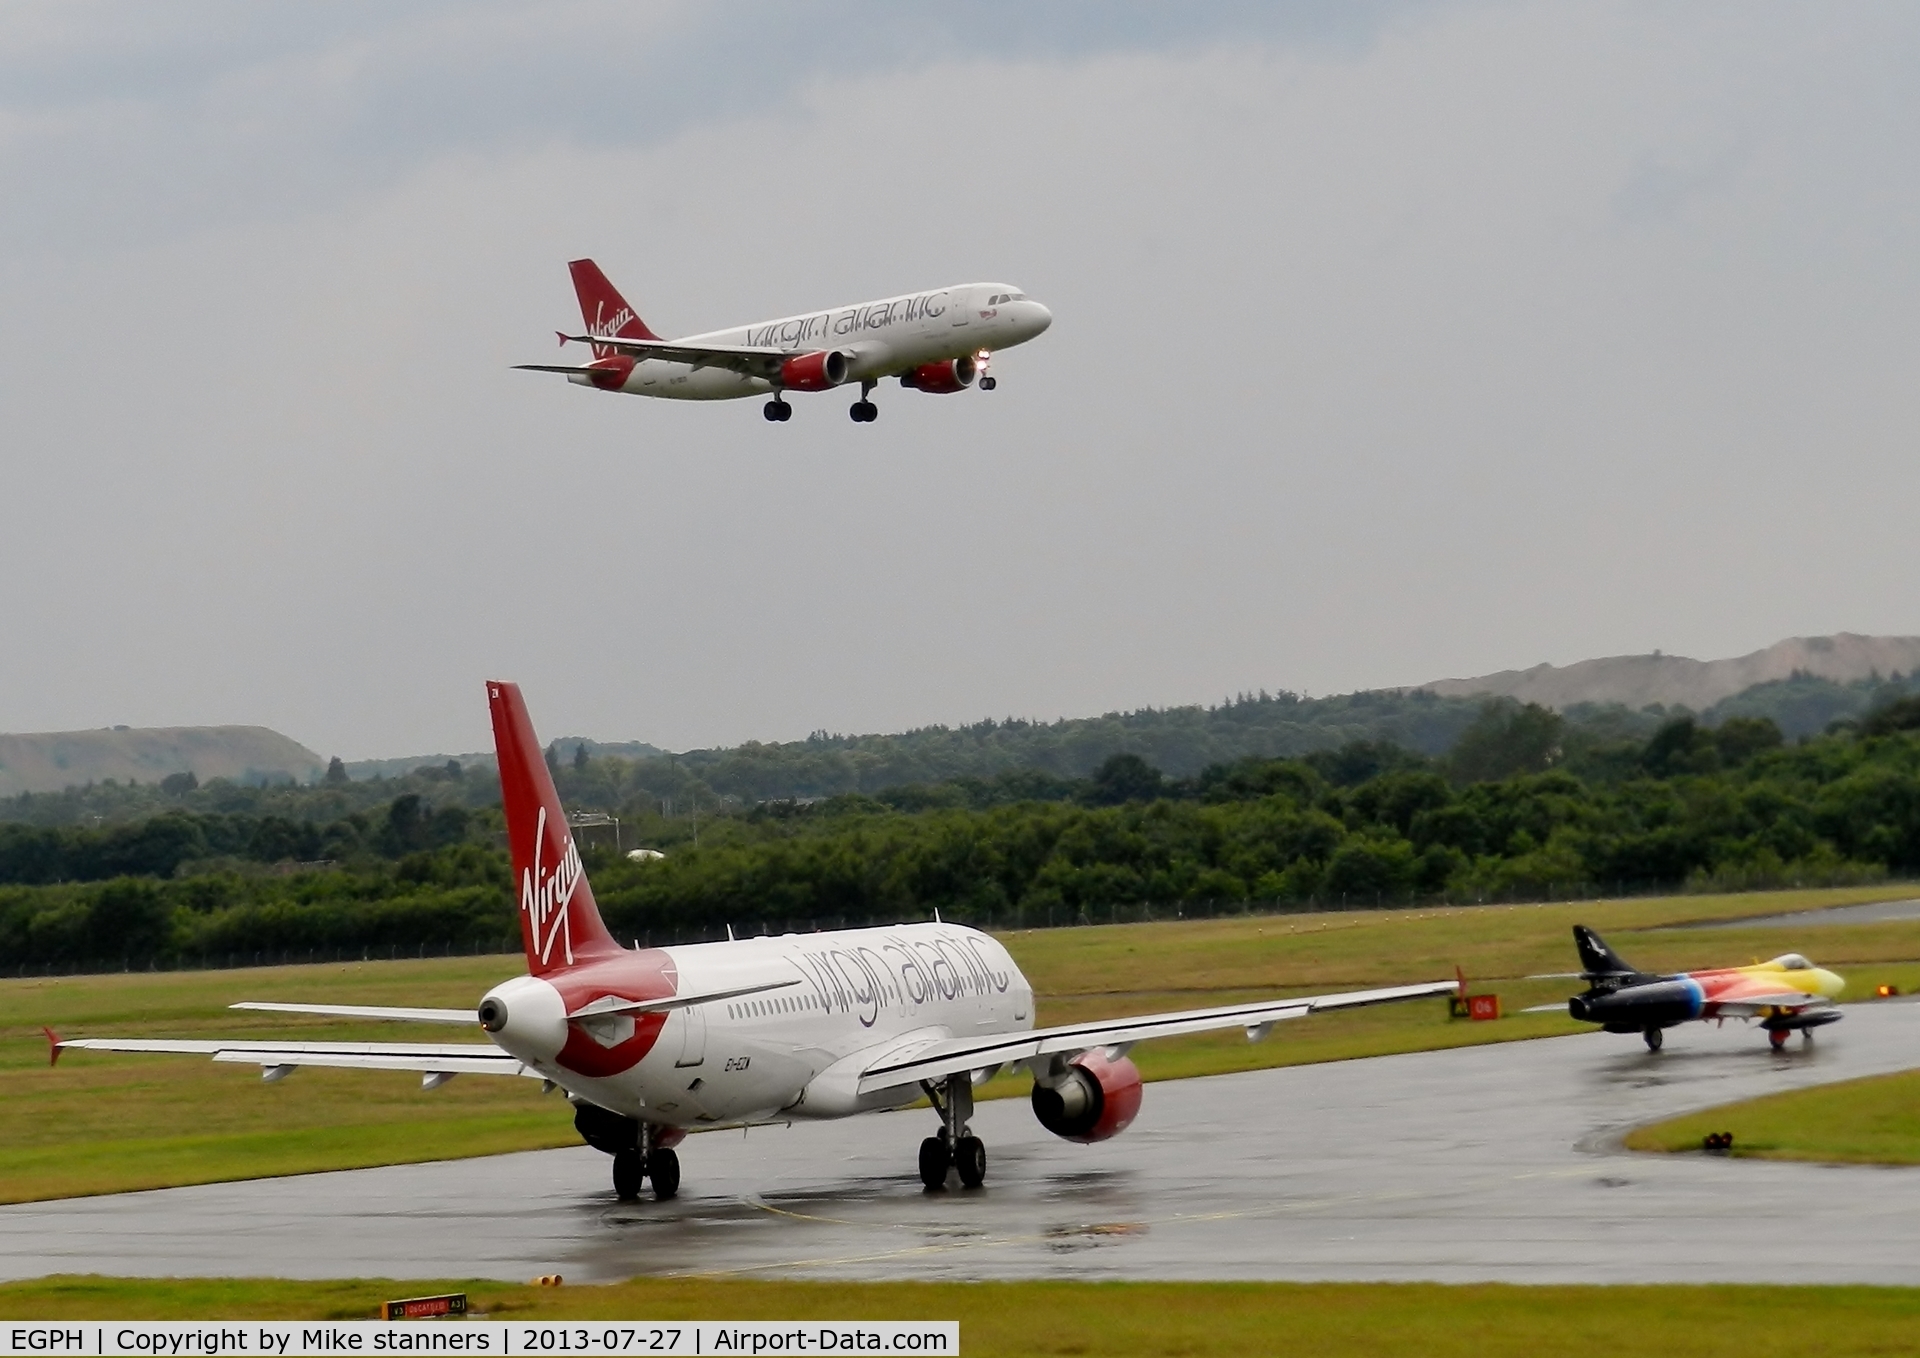 Edinburgh Airport, Edinburgh, Scotland United Kingdom (EGPH) - Virgin A320-214 EI-DEO Landing runway 06 while Virgin A320 EI-EZW And Hunter G-PSST Hold 